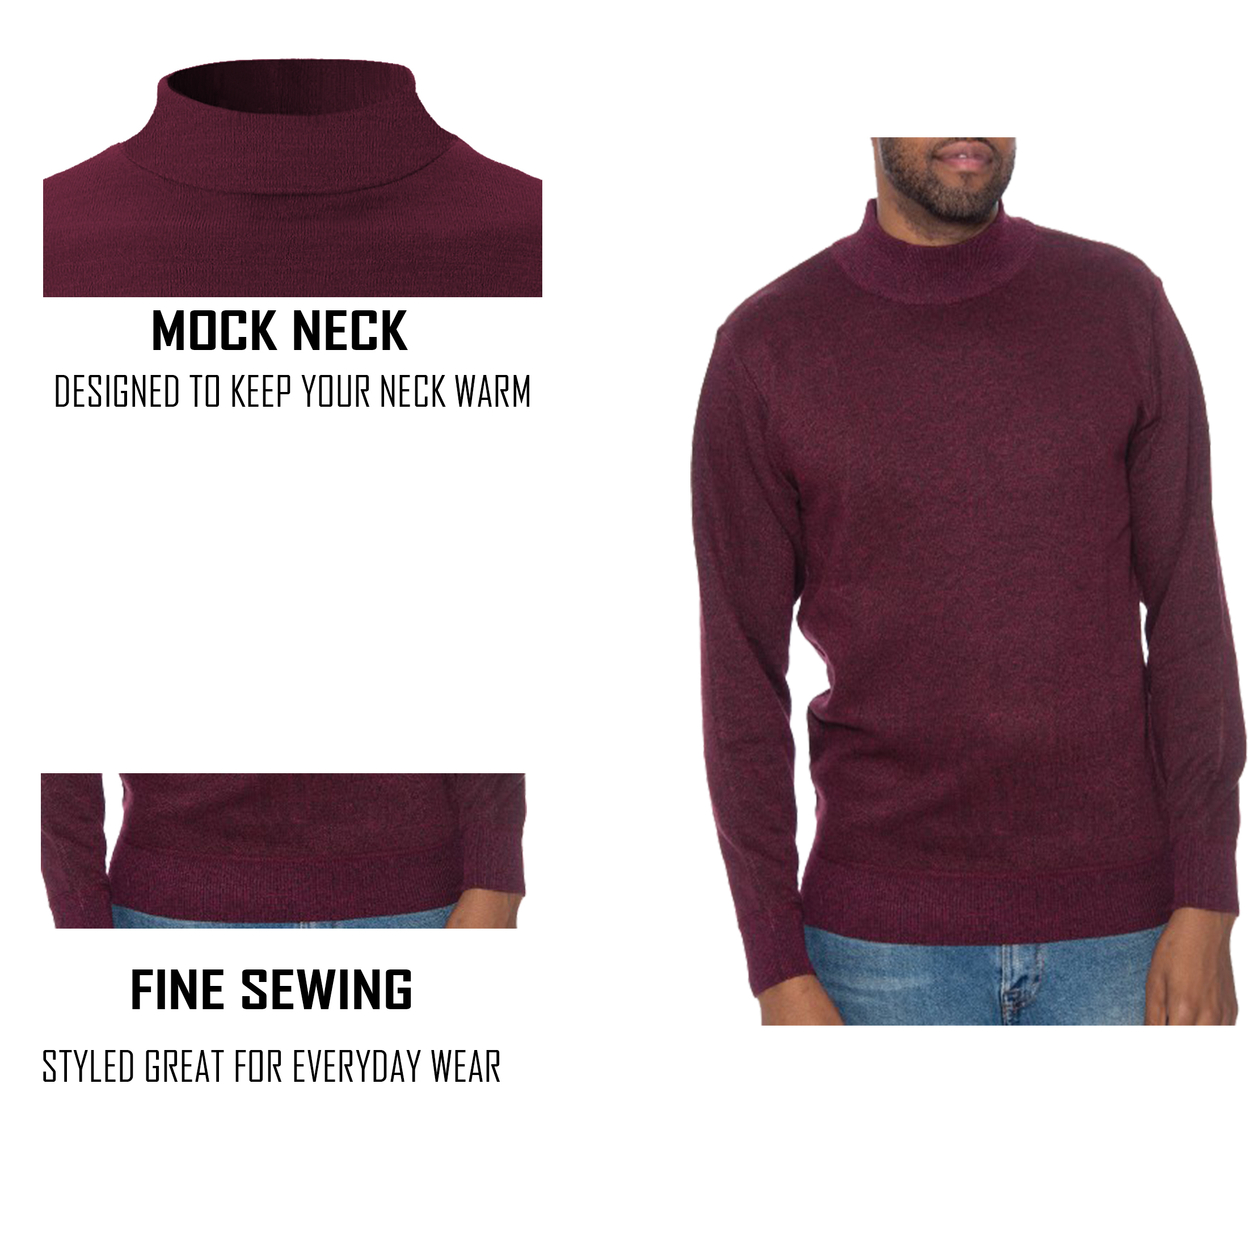 2-Pack: Men's Winter Warm Cozy Knit Slim Fit Mock Neck Sweater - Black& Burgundy, X-large